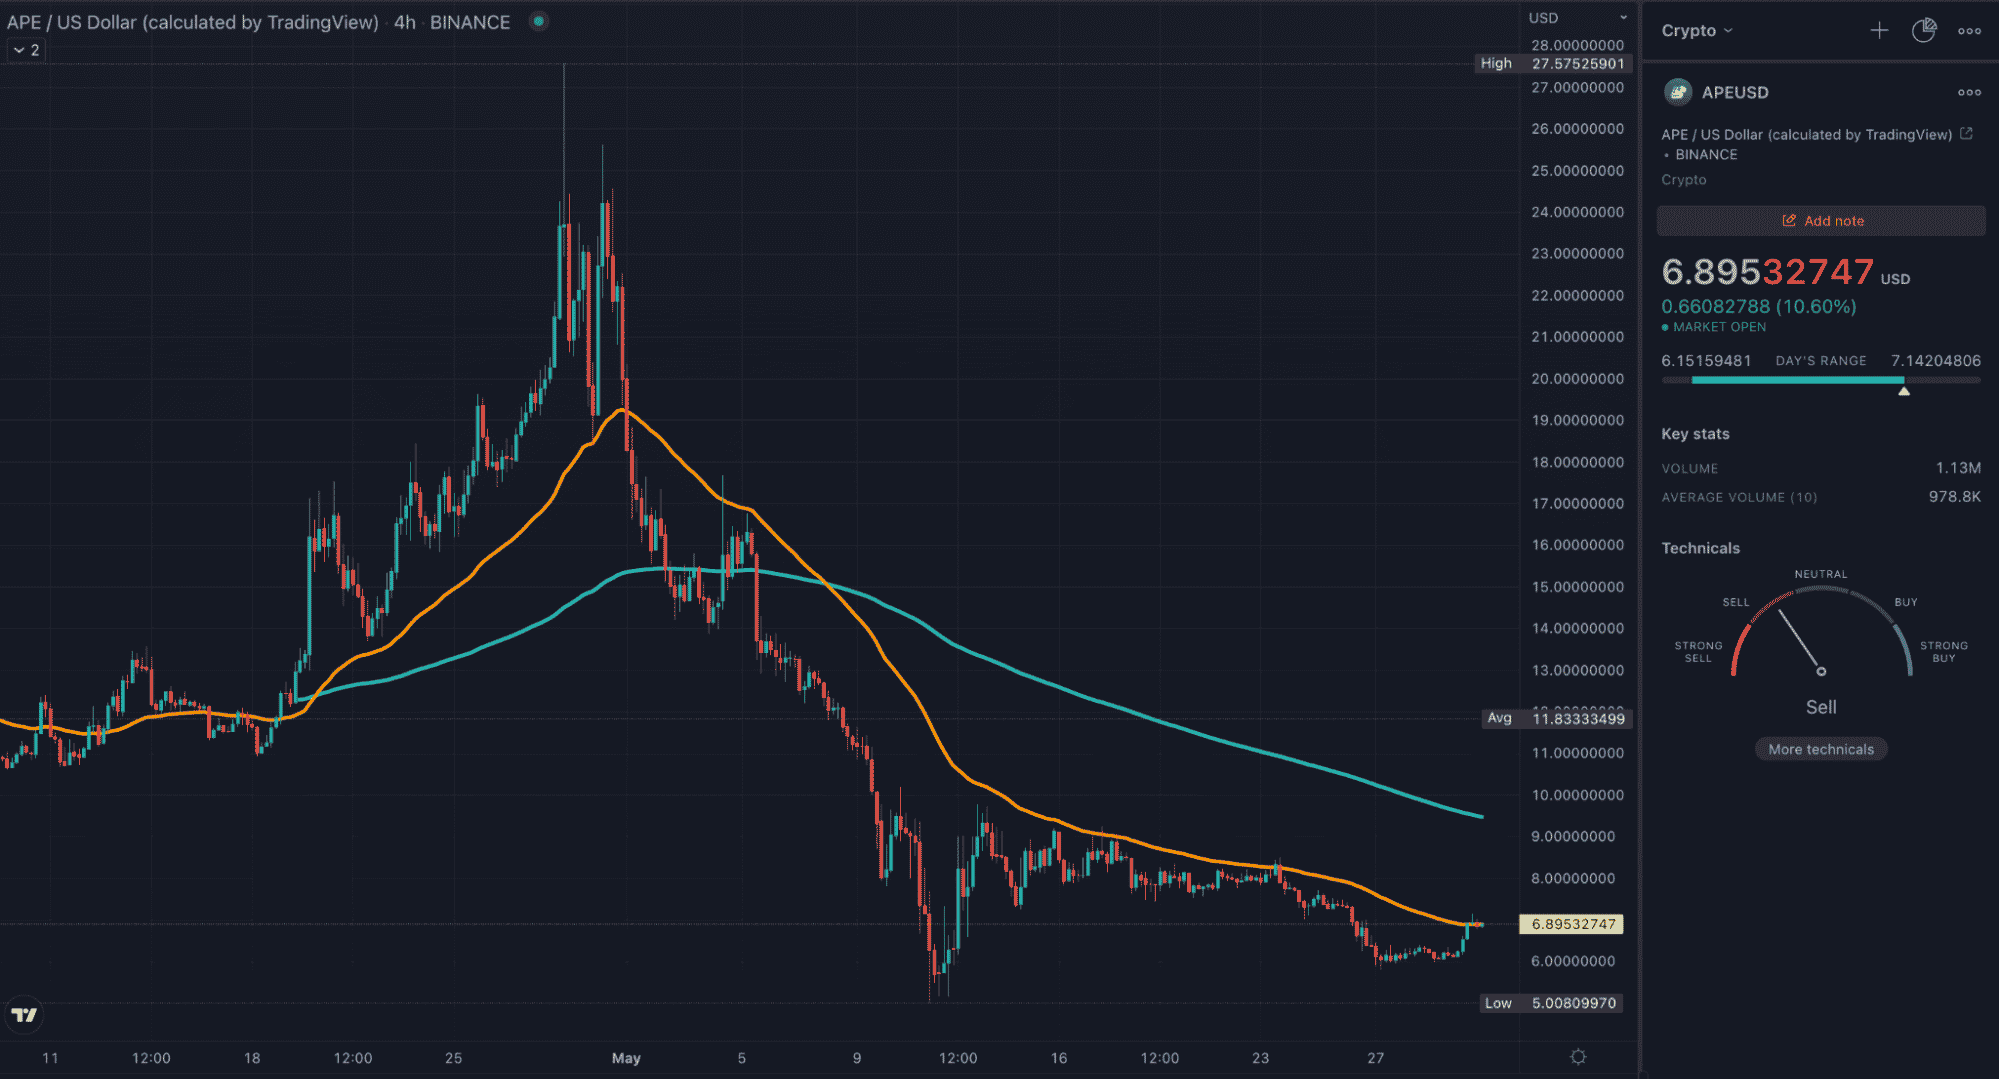 APE TradingView 4HR chart